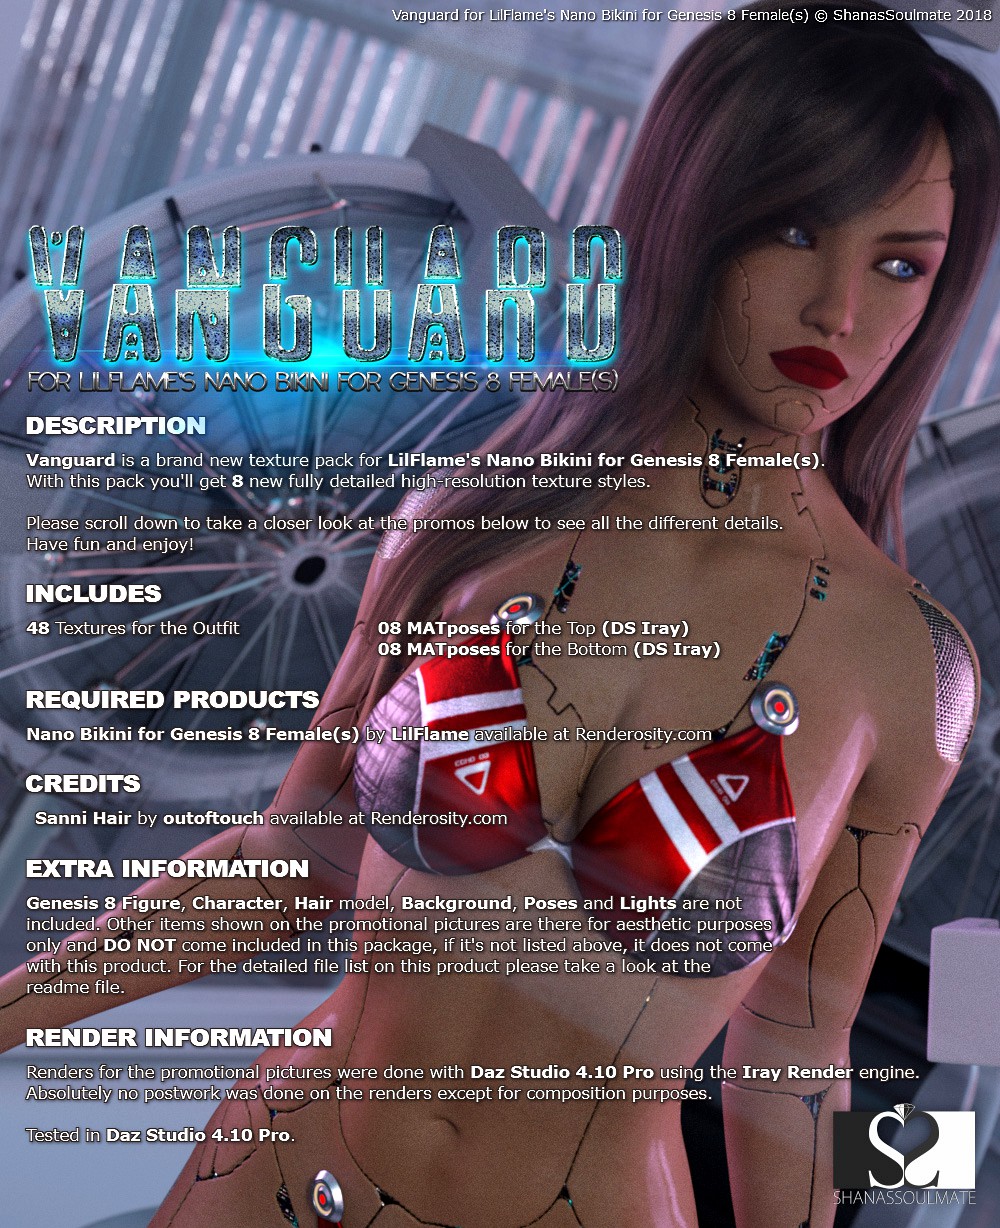 Vanguard for Nano Bikini for Genesis 8 Females